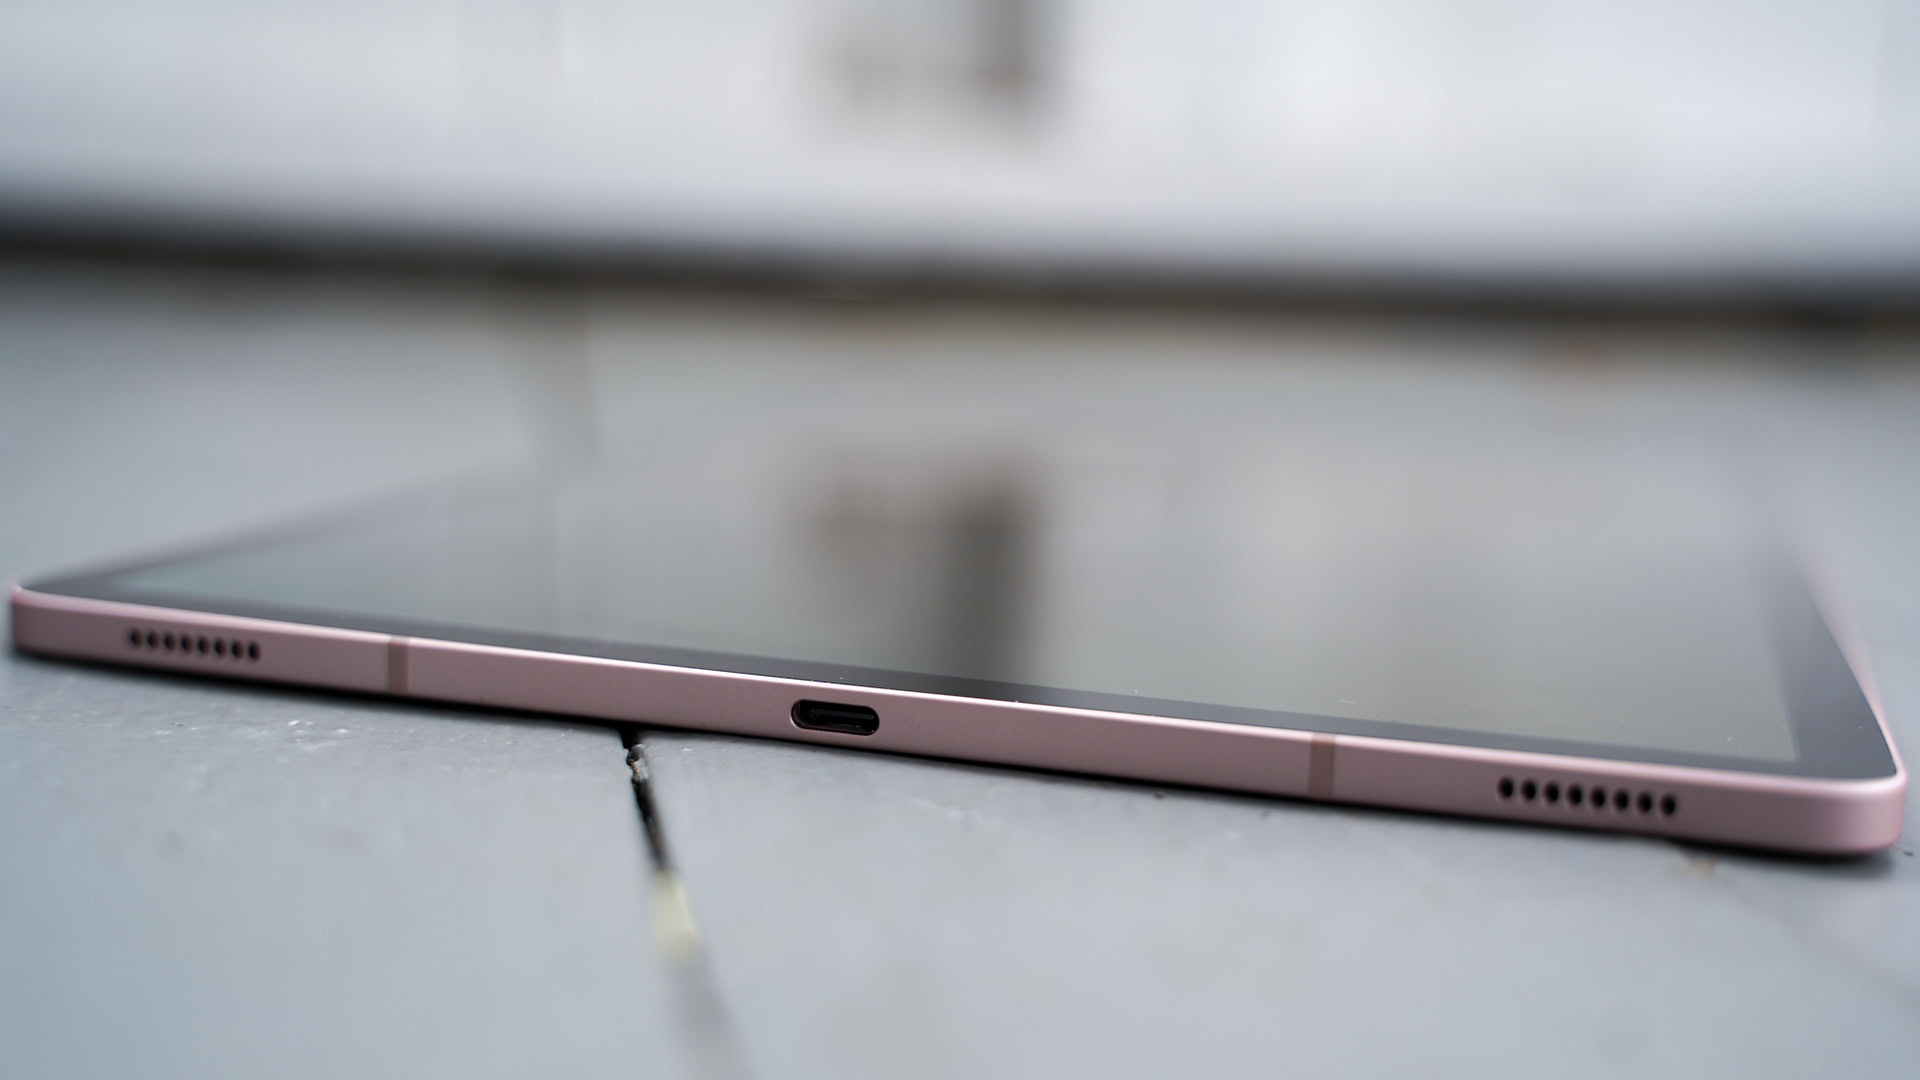 Samsung Galaxy Tab S8 Plus review: Hitting the sweet spot